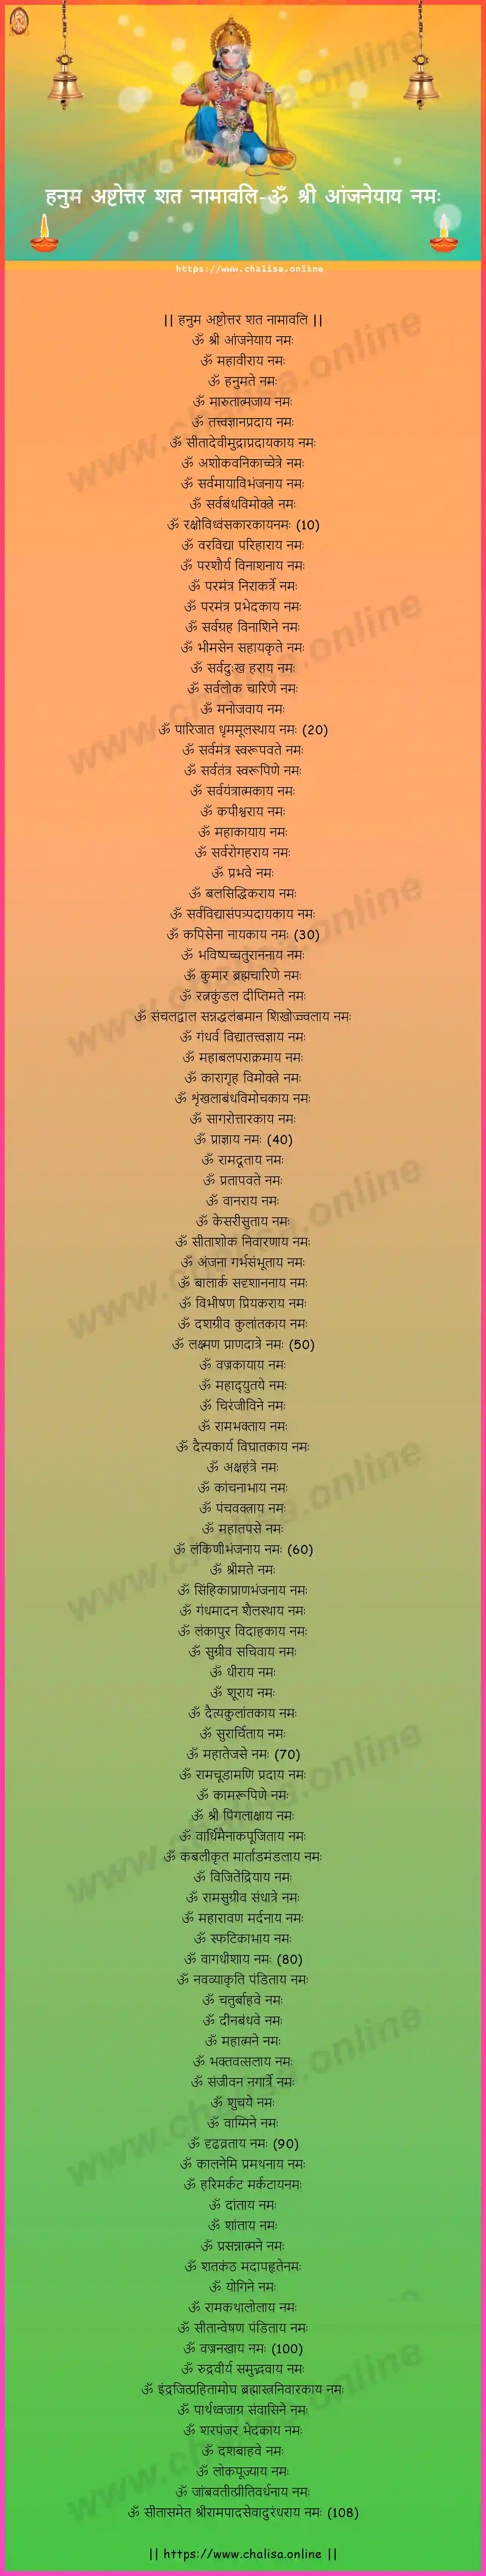 om-sri-anjaneyaya-hanuman-ashtottara-sata-namavali-konkani-konkani-lyrics-download